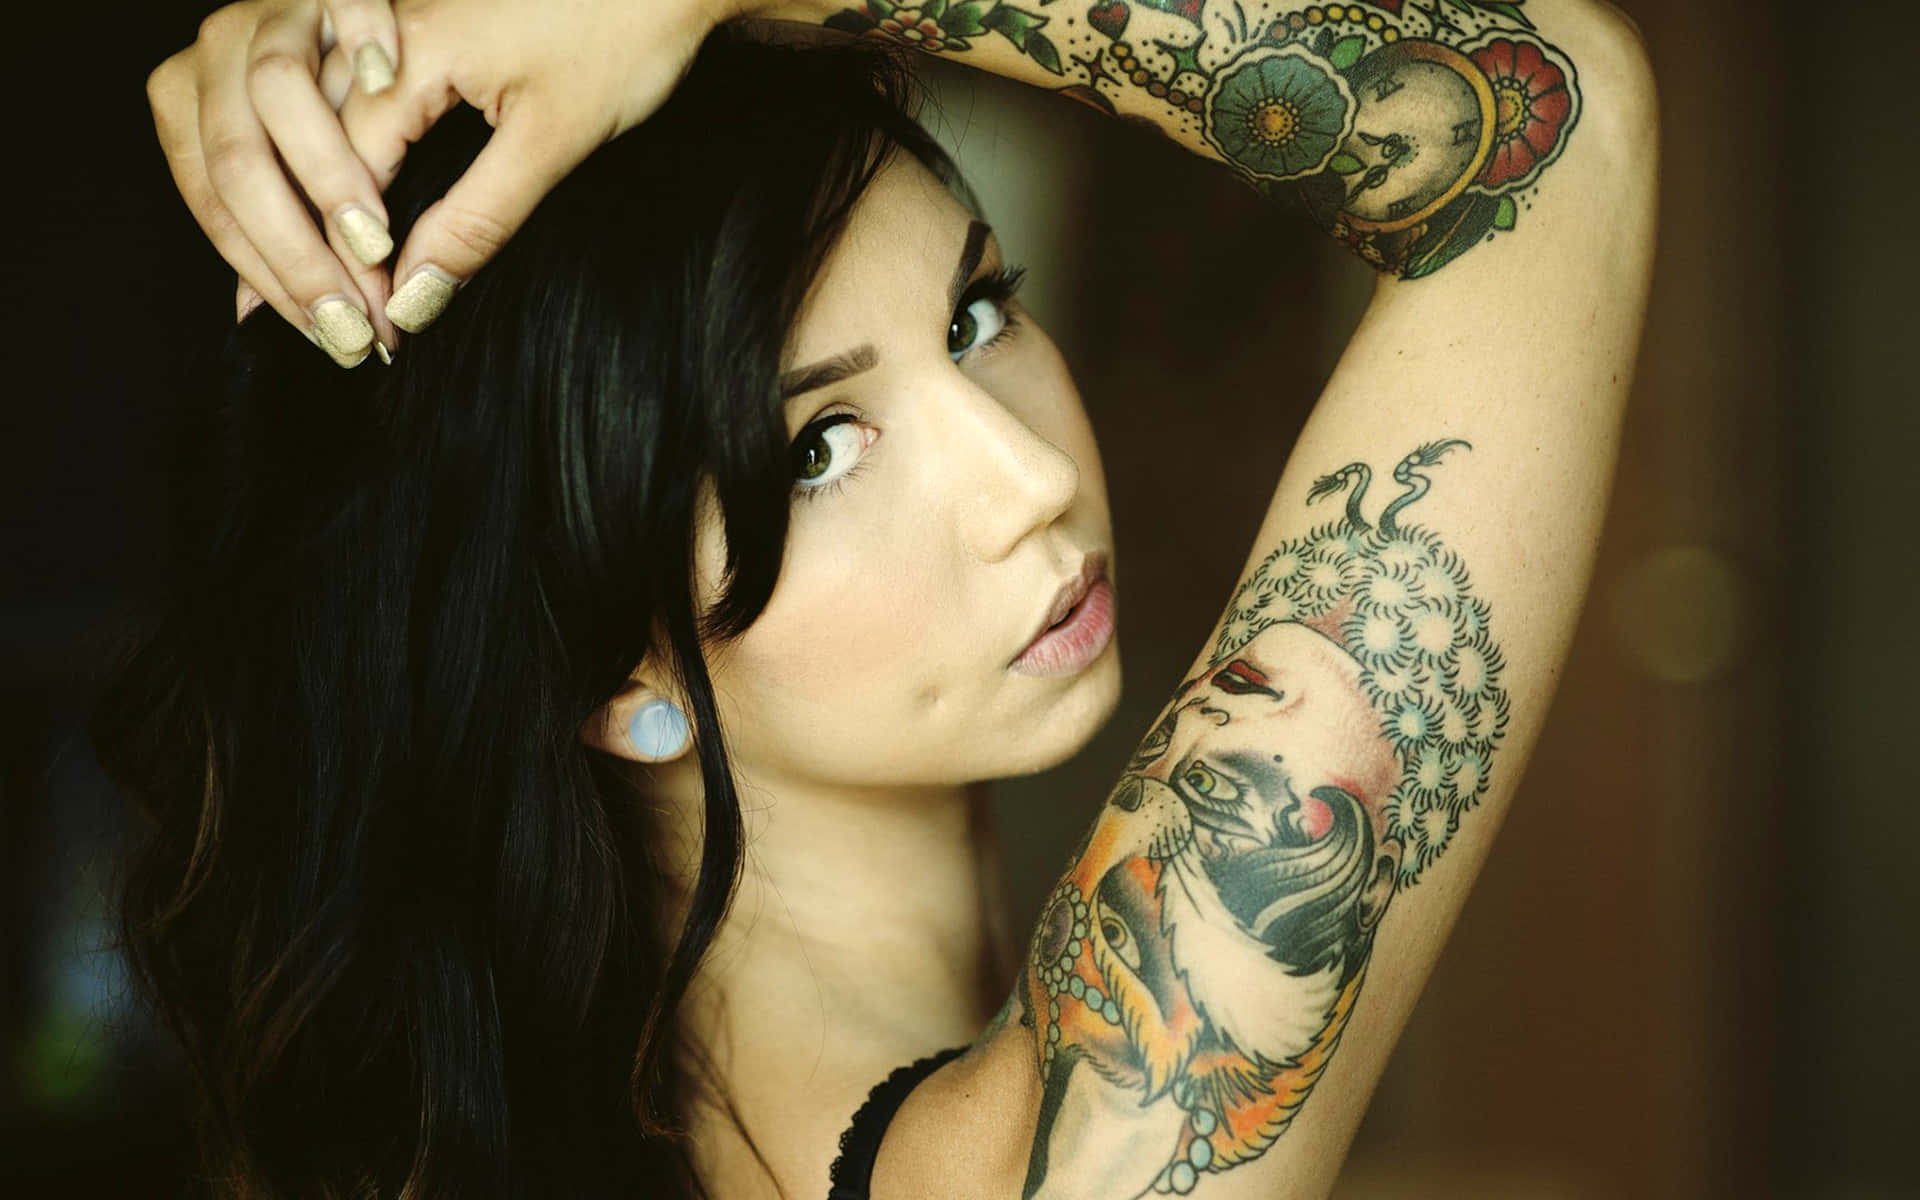 HD wallpaper: Tattoos girl | Wallpaper Flare